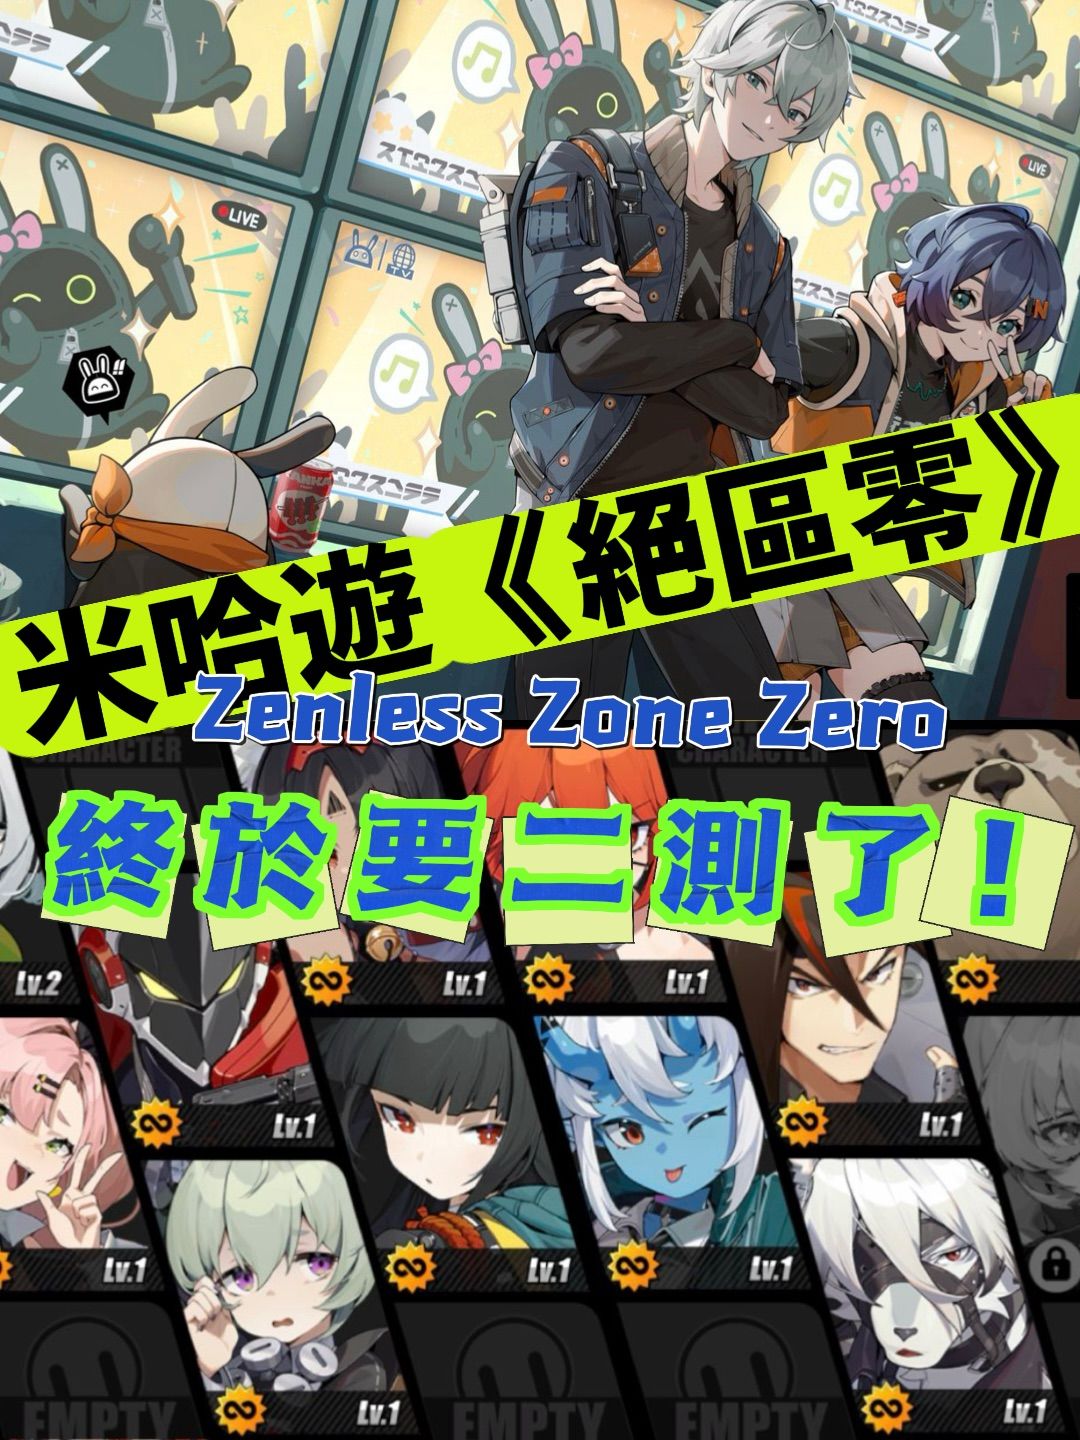 Zenless Zone Zero android iOS pre-register-TapTap